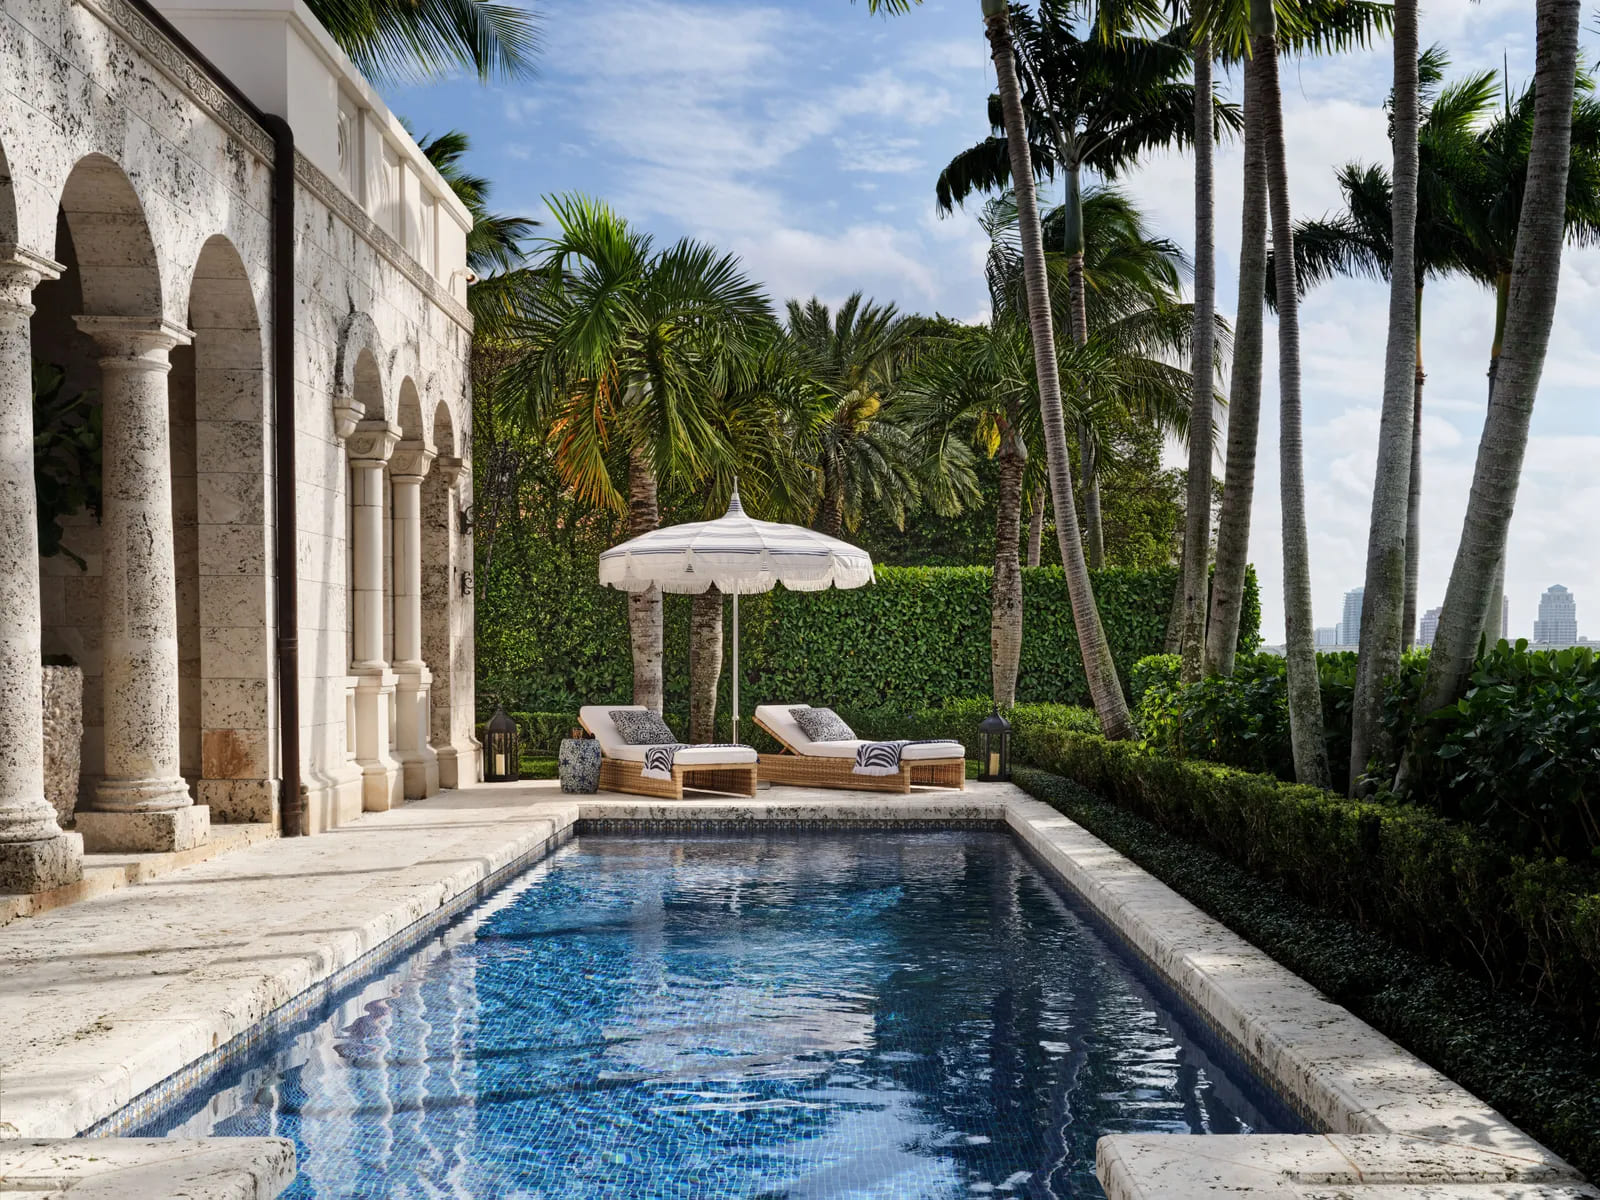 Epic Celebrity Home: Inside Tommy Hilfiger’s Palm Beach Home